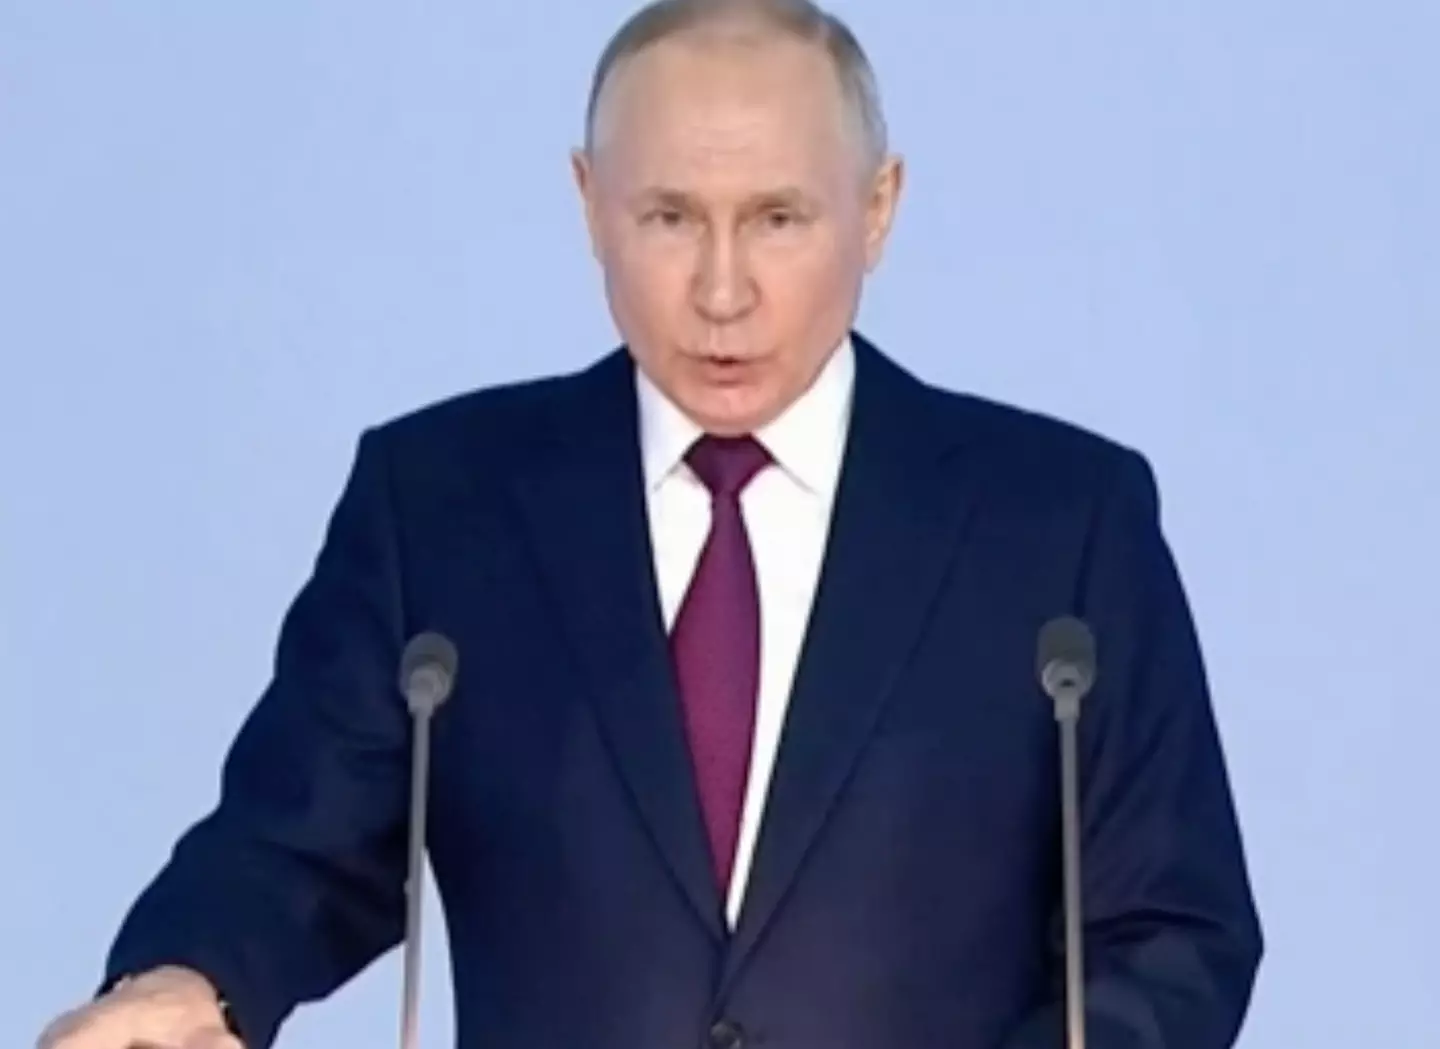 Vladimir Putin says the West supports pedophilia.